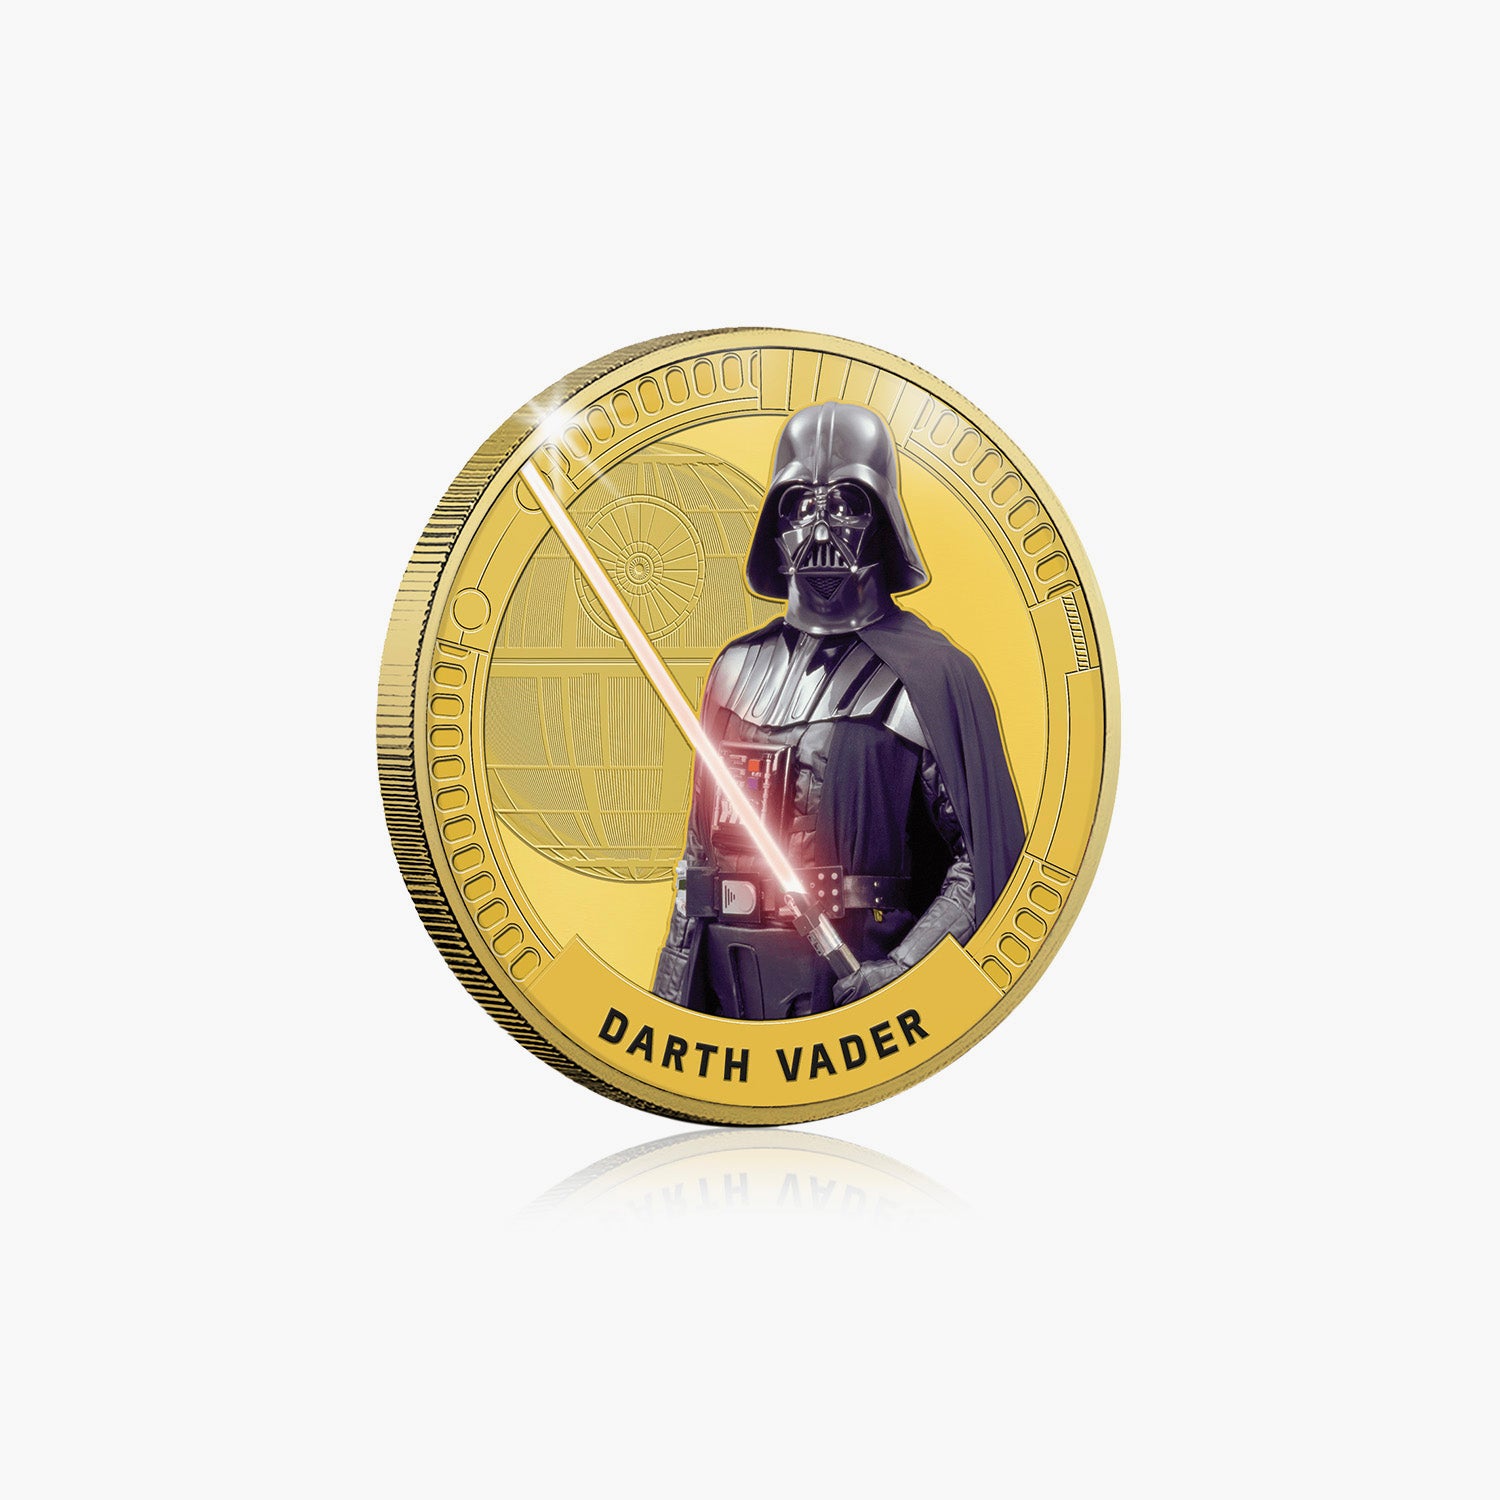 Darth Vader Gold - Plated Commemorative